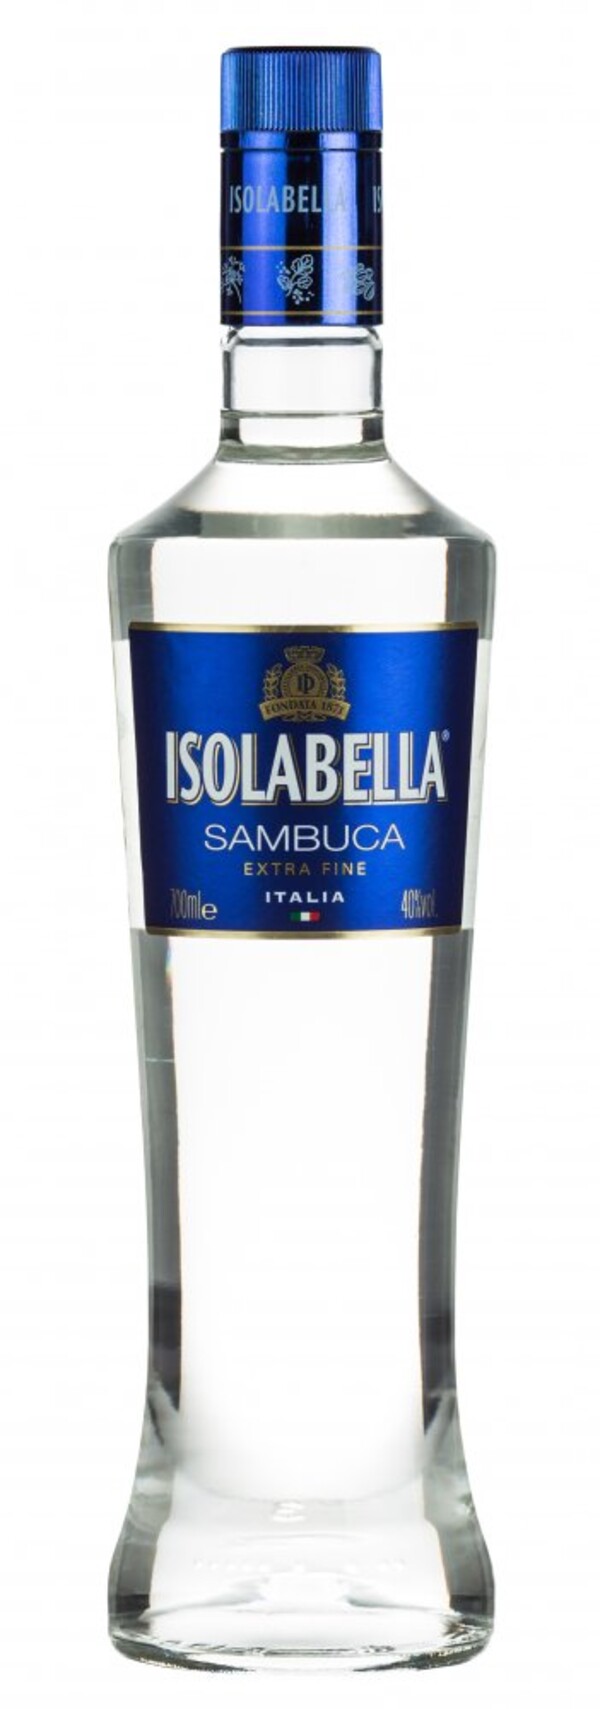 Isolabello Sambuca